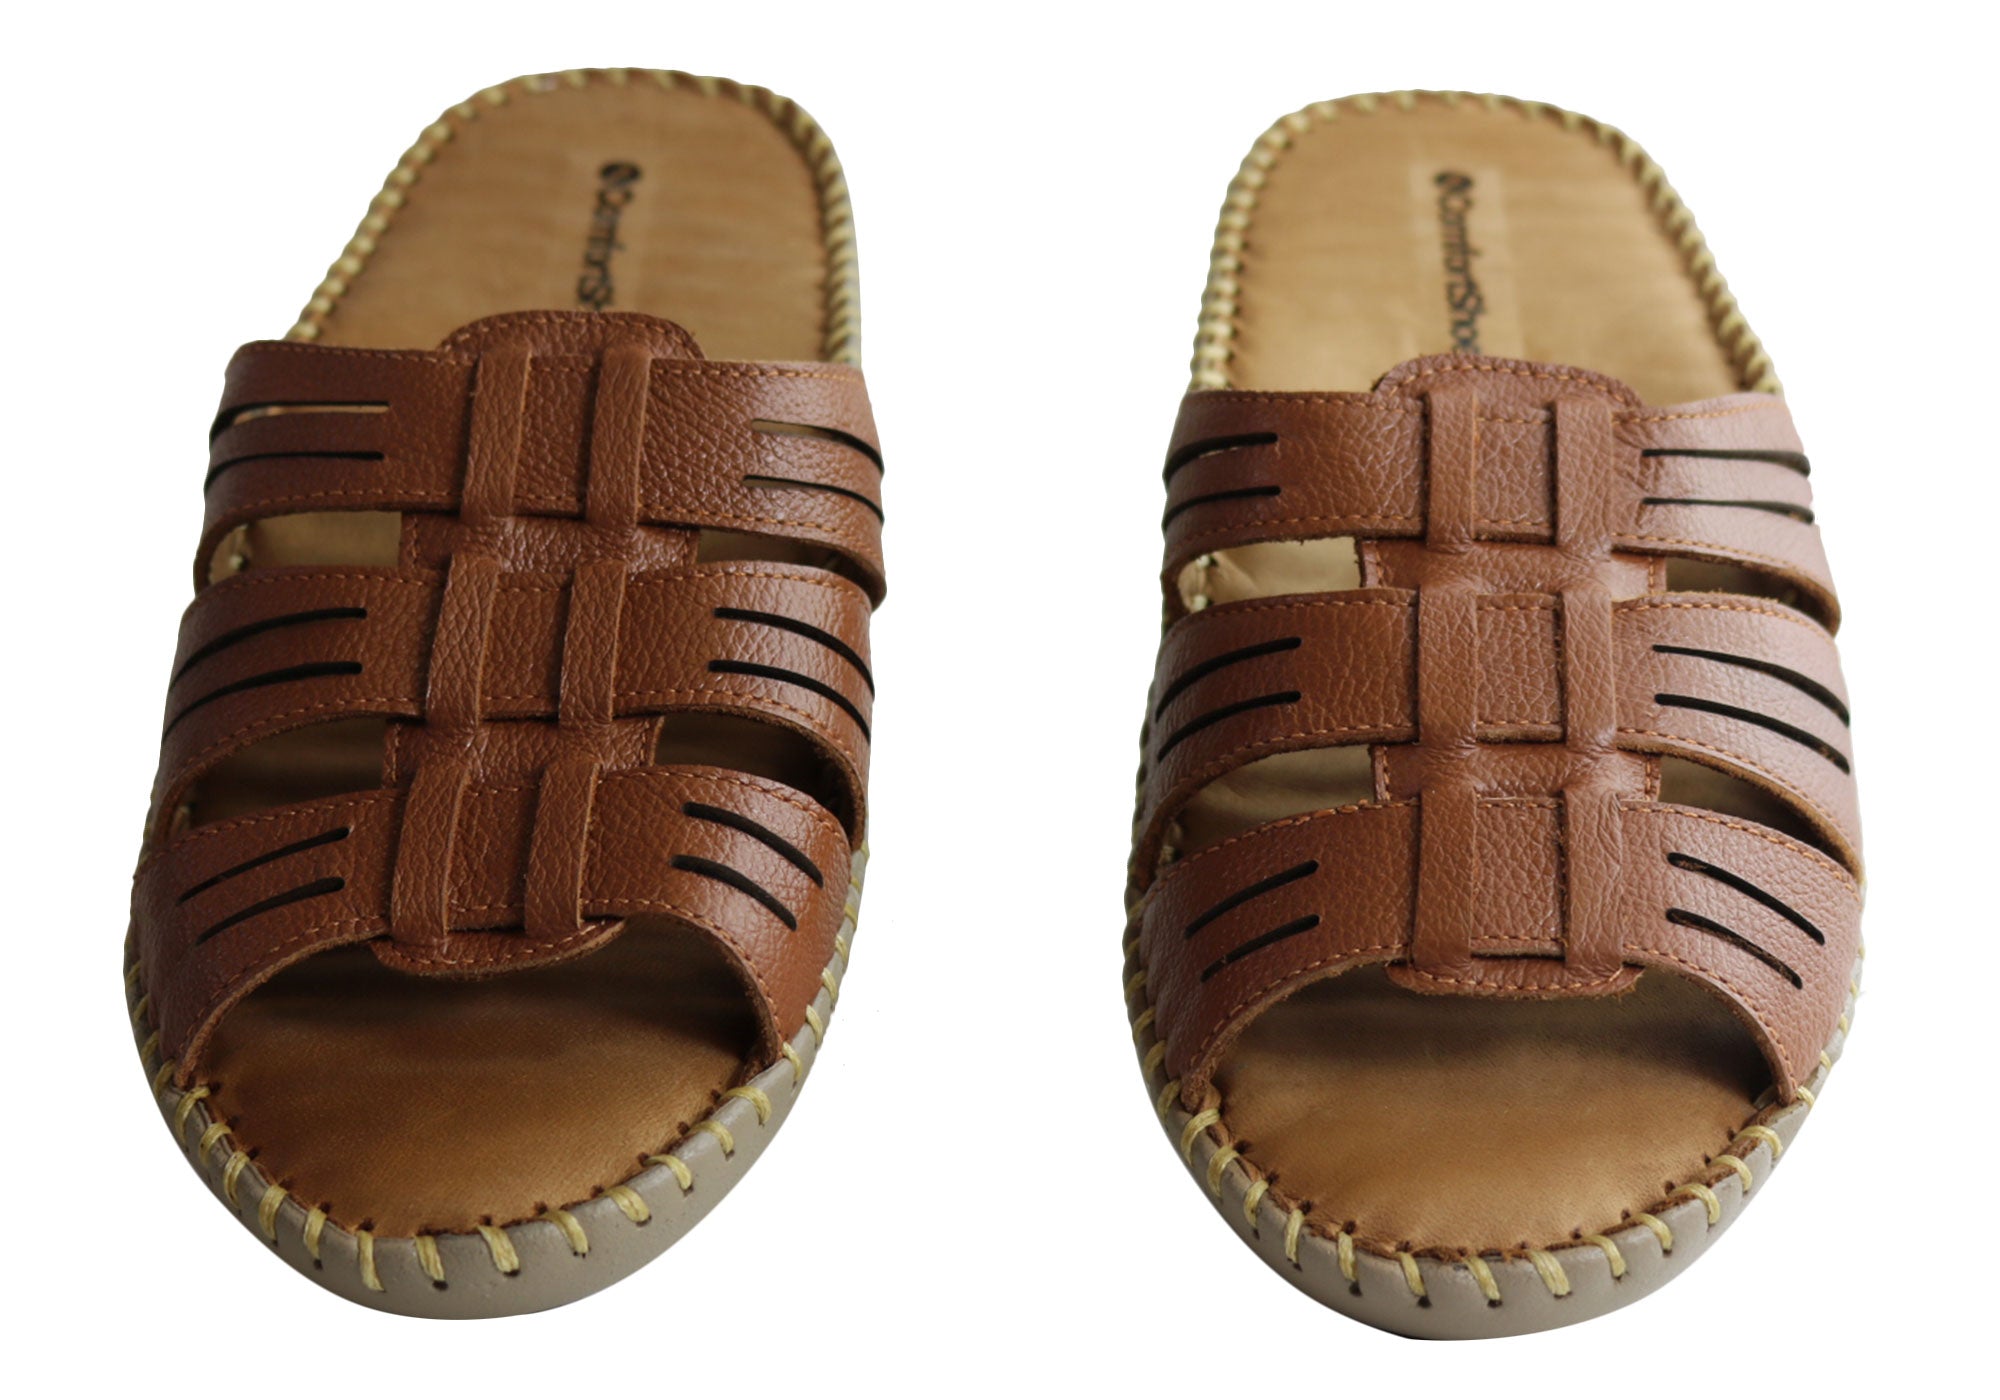 Comfortshoeco Renee Womens Leather Brazilian Comfort Slides Sandals